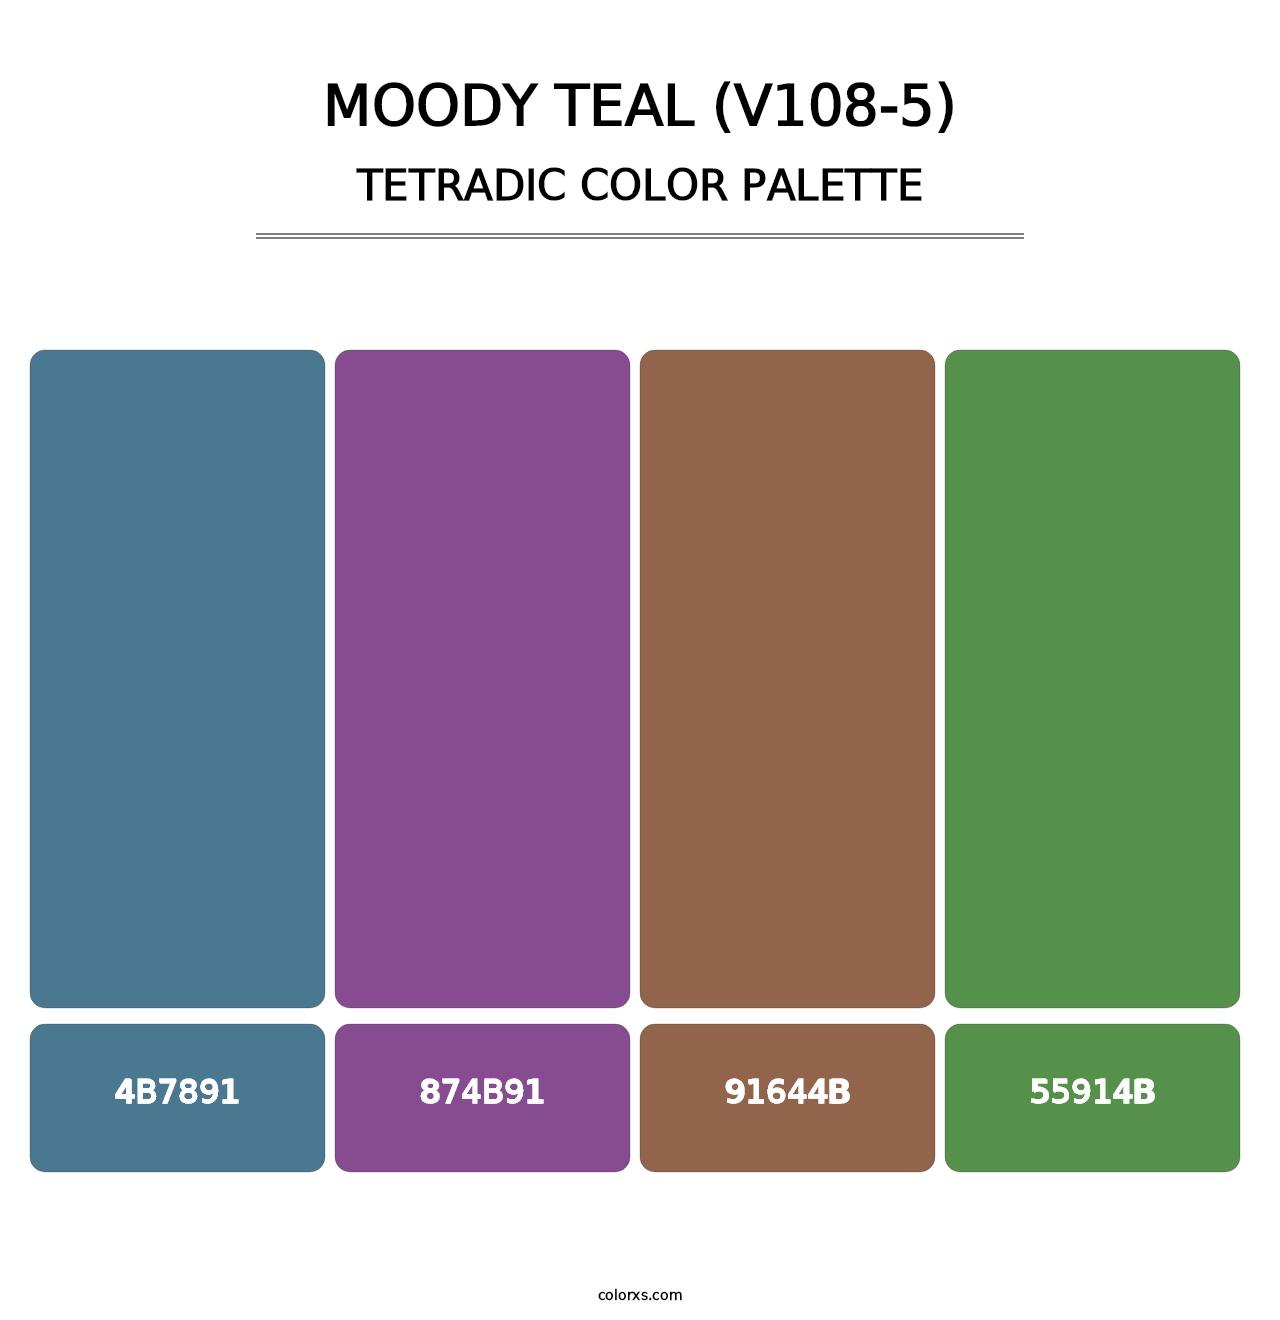 Moody Teal (V108-5) - Tetradic Color Palette